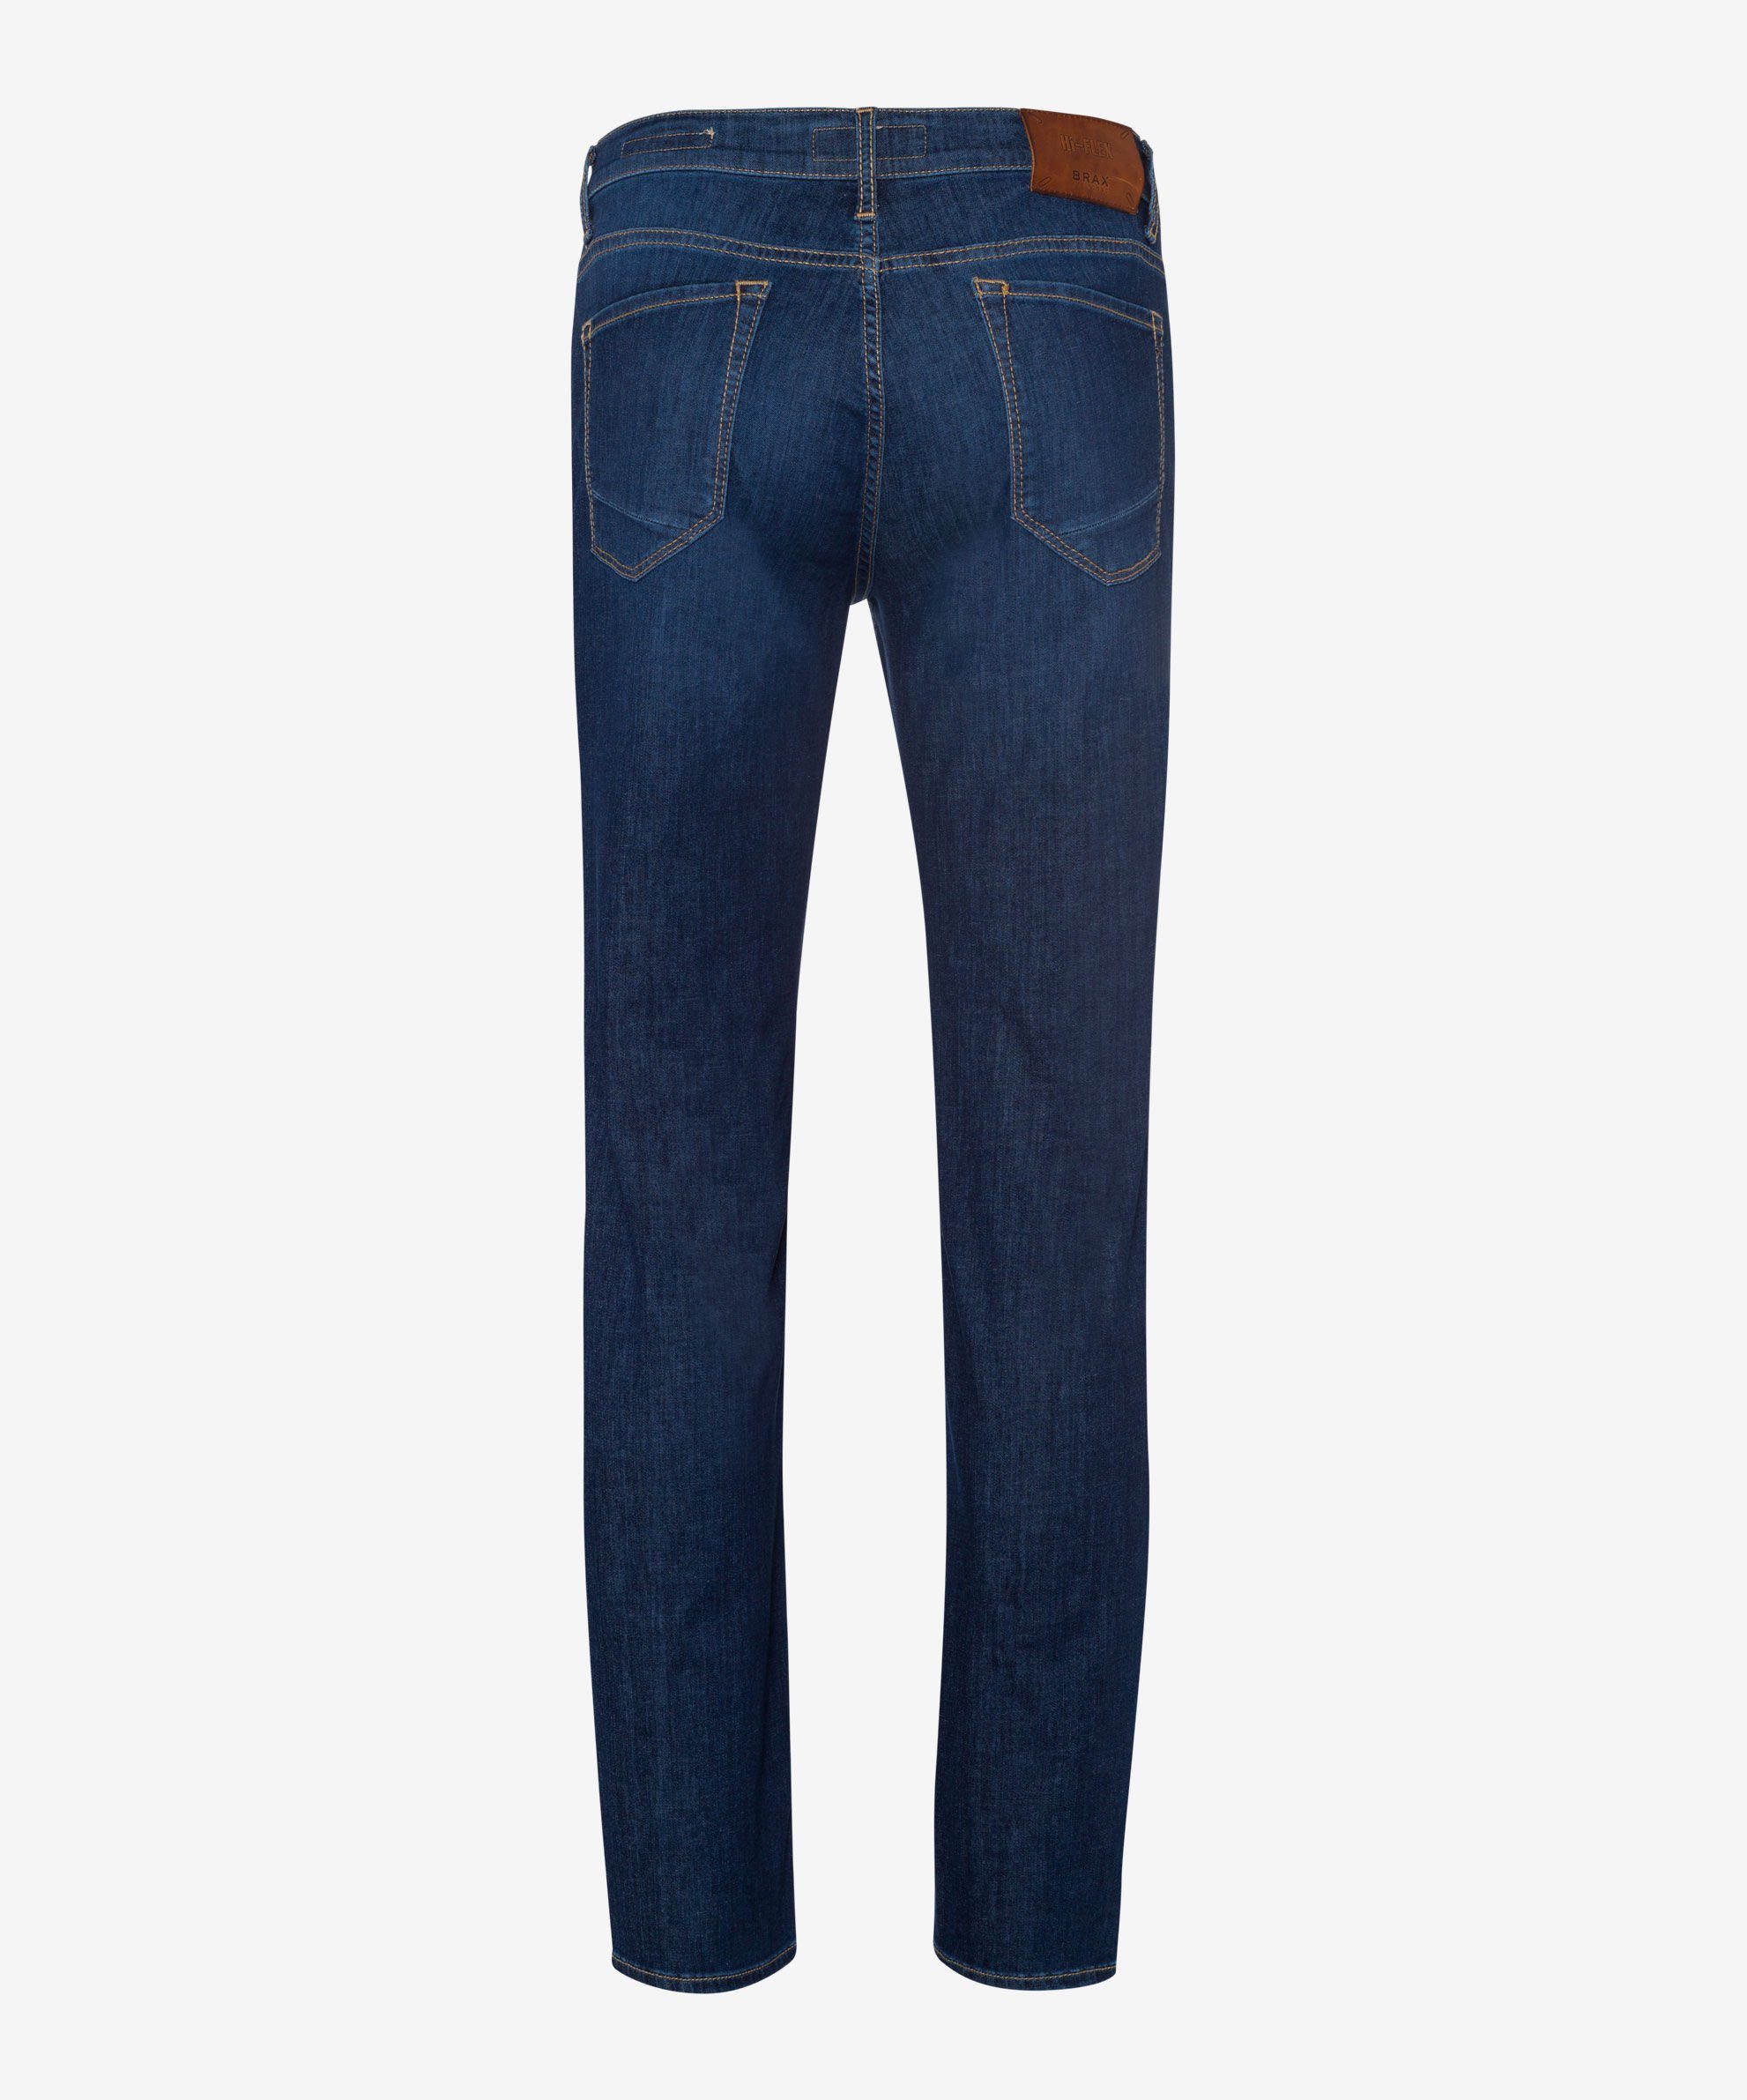 Herren Jeans Brax 5-Pocket-Jeans BRAX CHUCK cryptic blue used 7953020 84-6254-25 -